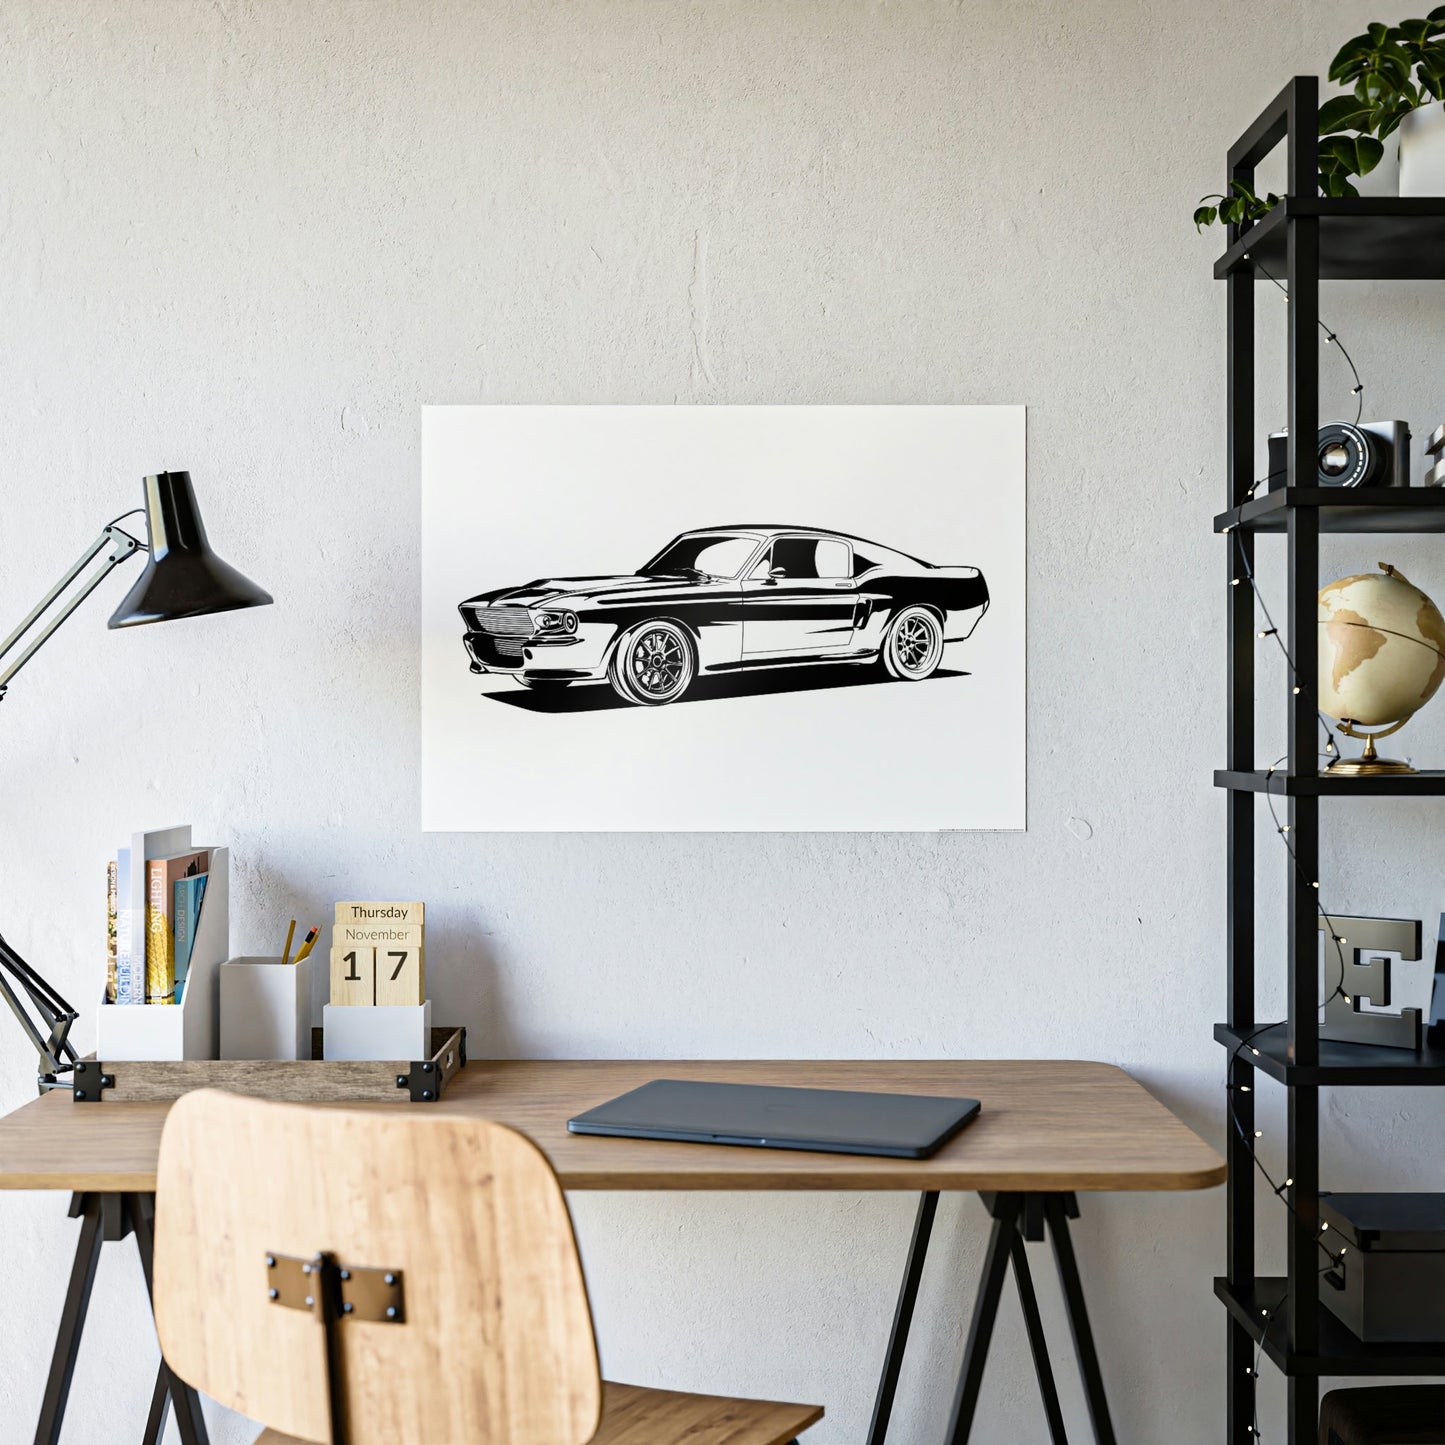 Racing Spirit: Mustang Framed Canvas Print and Wall Art